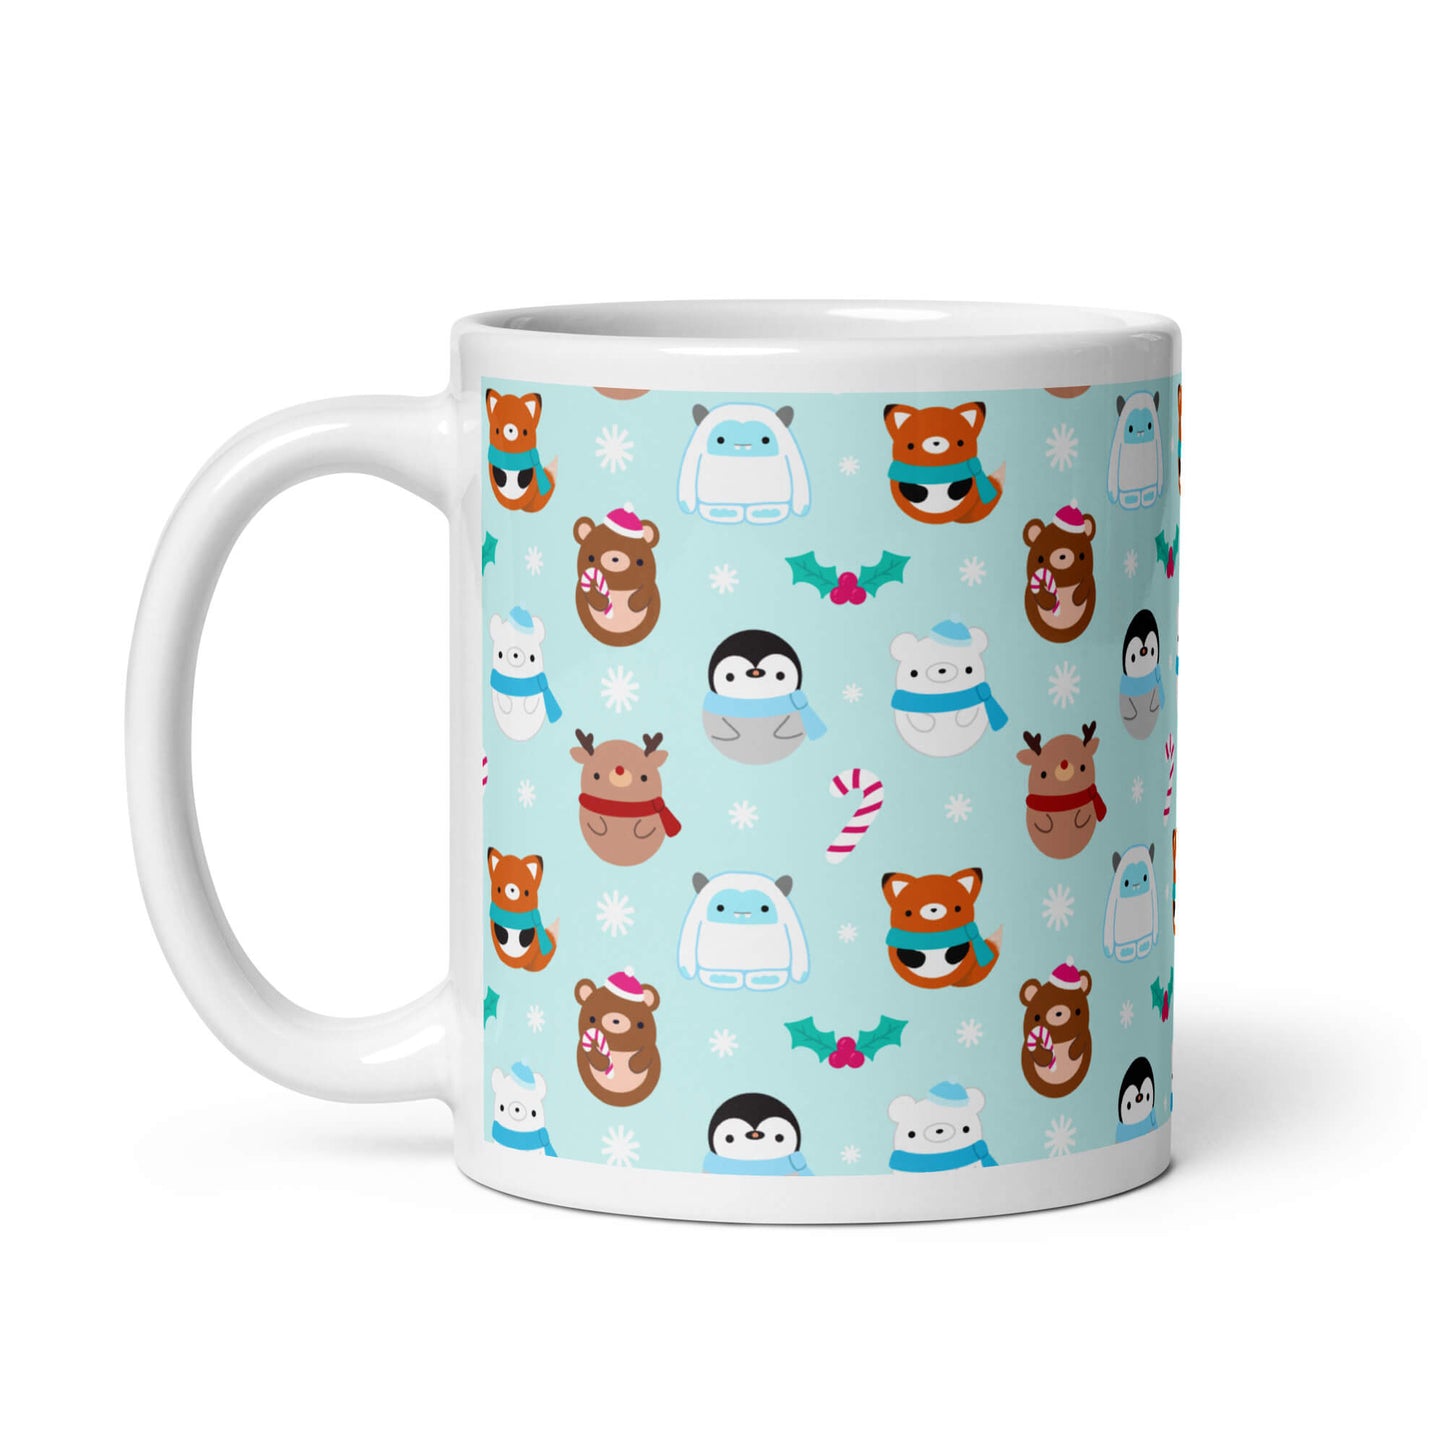 Blue Christmas Mug with Foxes, Bears, Reindeer, Penguins and Yetis